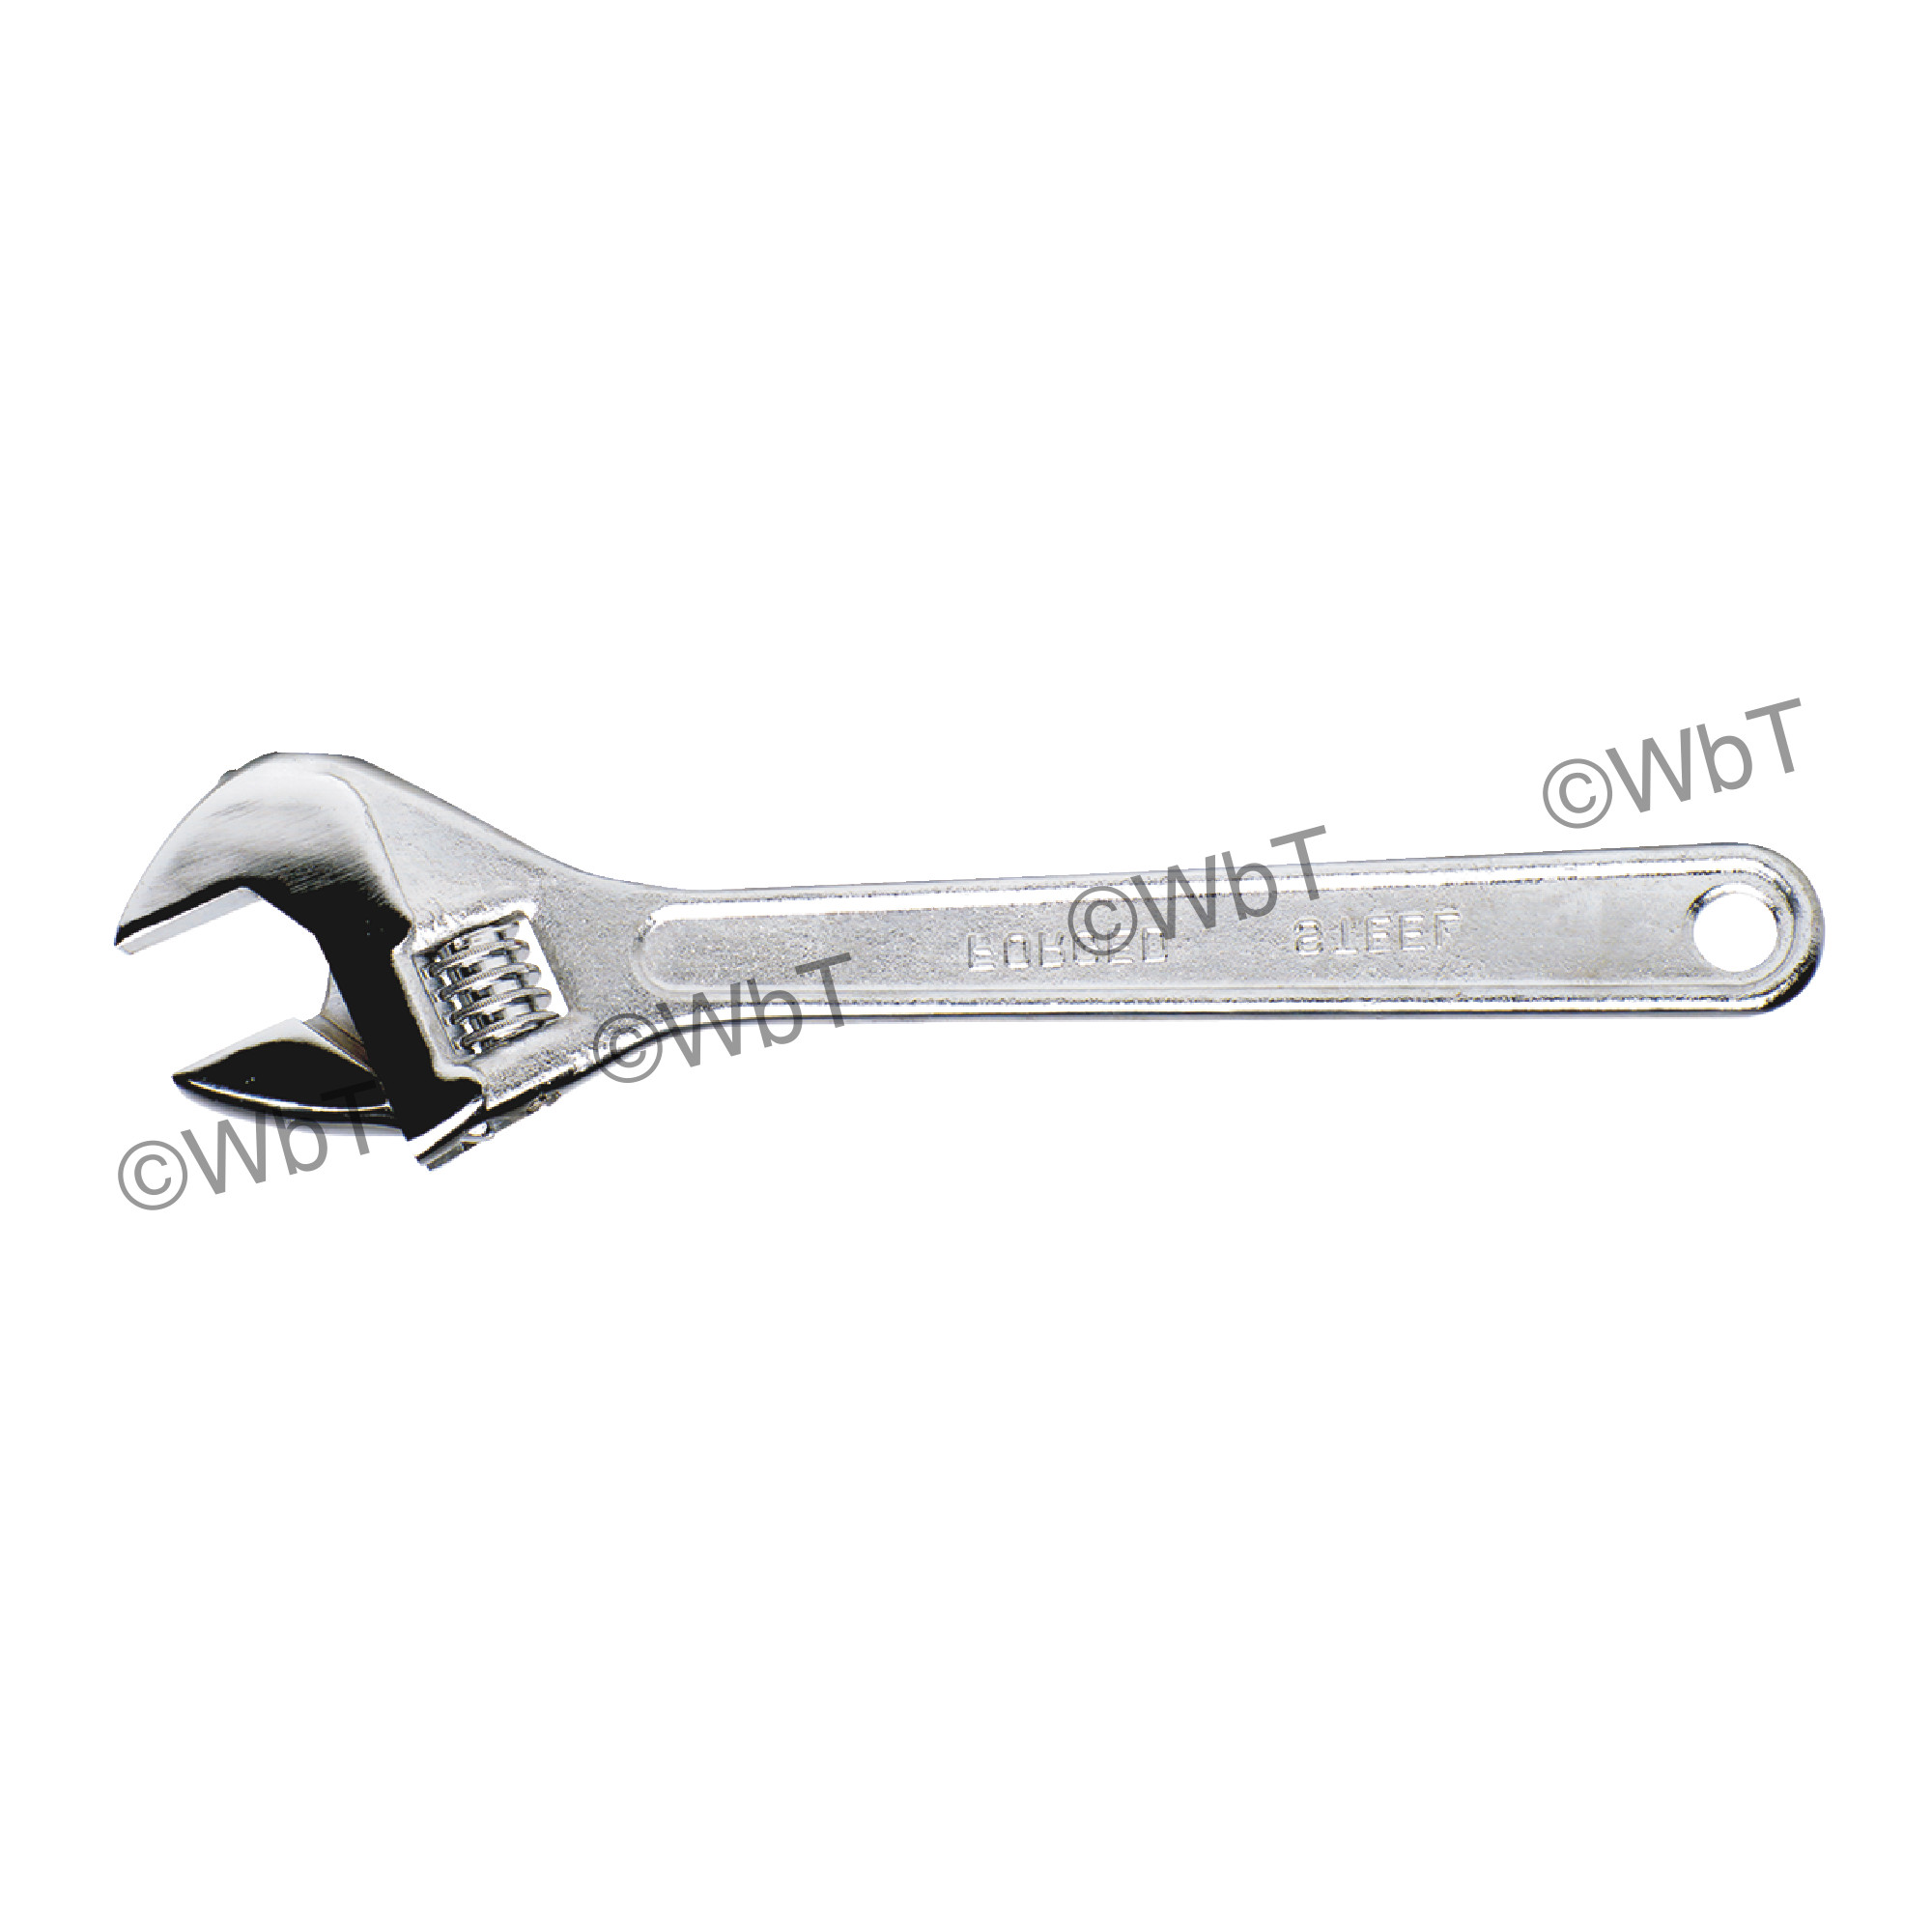 Adjustable Wrench - Model: TTC20812   SIZE: 8"